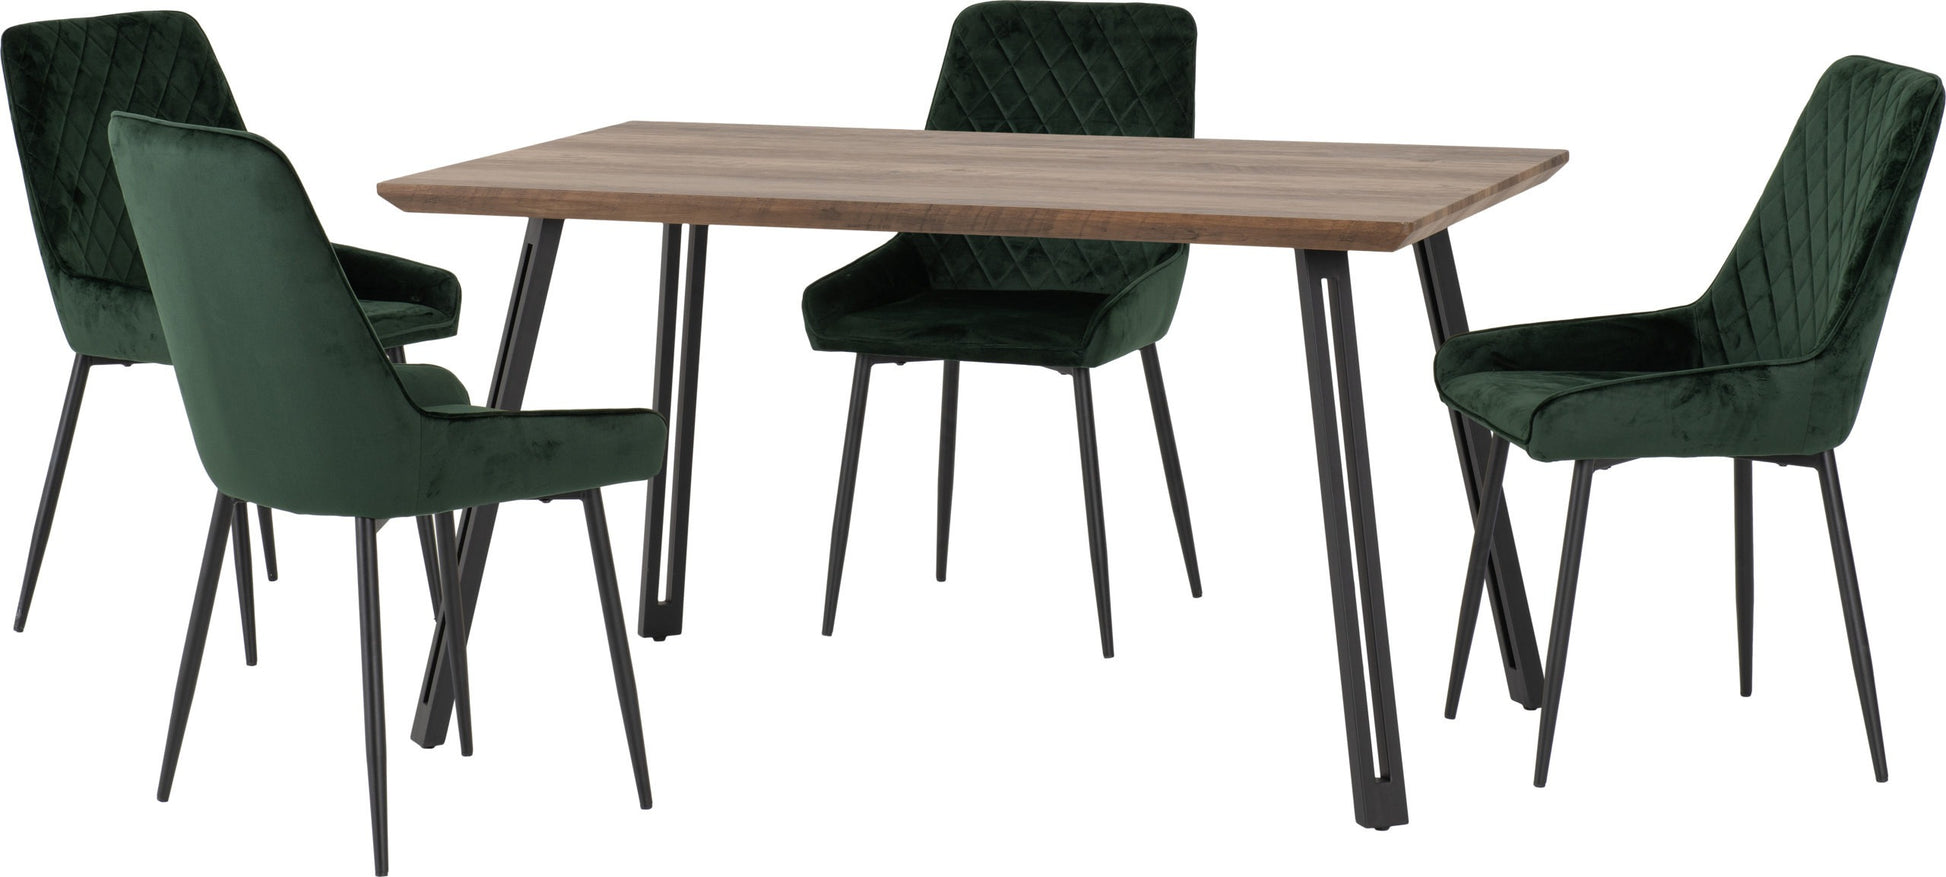 QUEBEC-DINING-TABLE-STRAIGHT-EDGE-MEDIUM-OAK-EFFECT-400-403-049-scaled.jpg